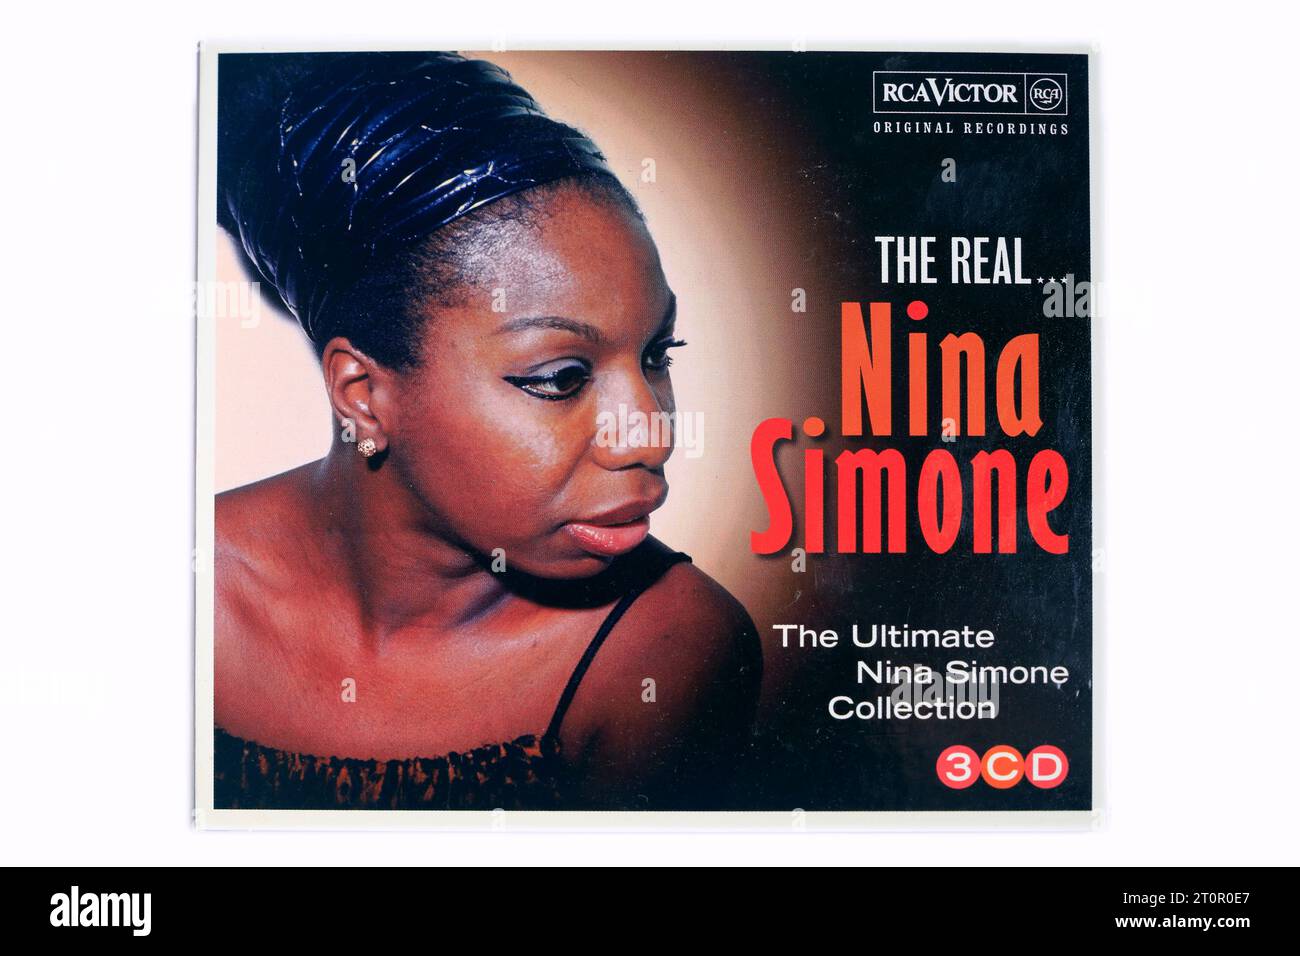 Nina Simone - The Real Nina Simone - Album CD case on light background Stock Photo